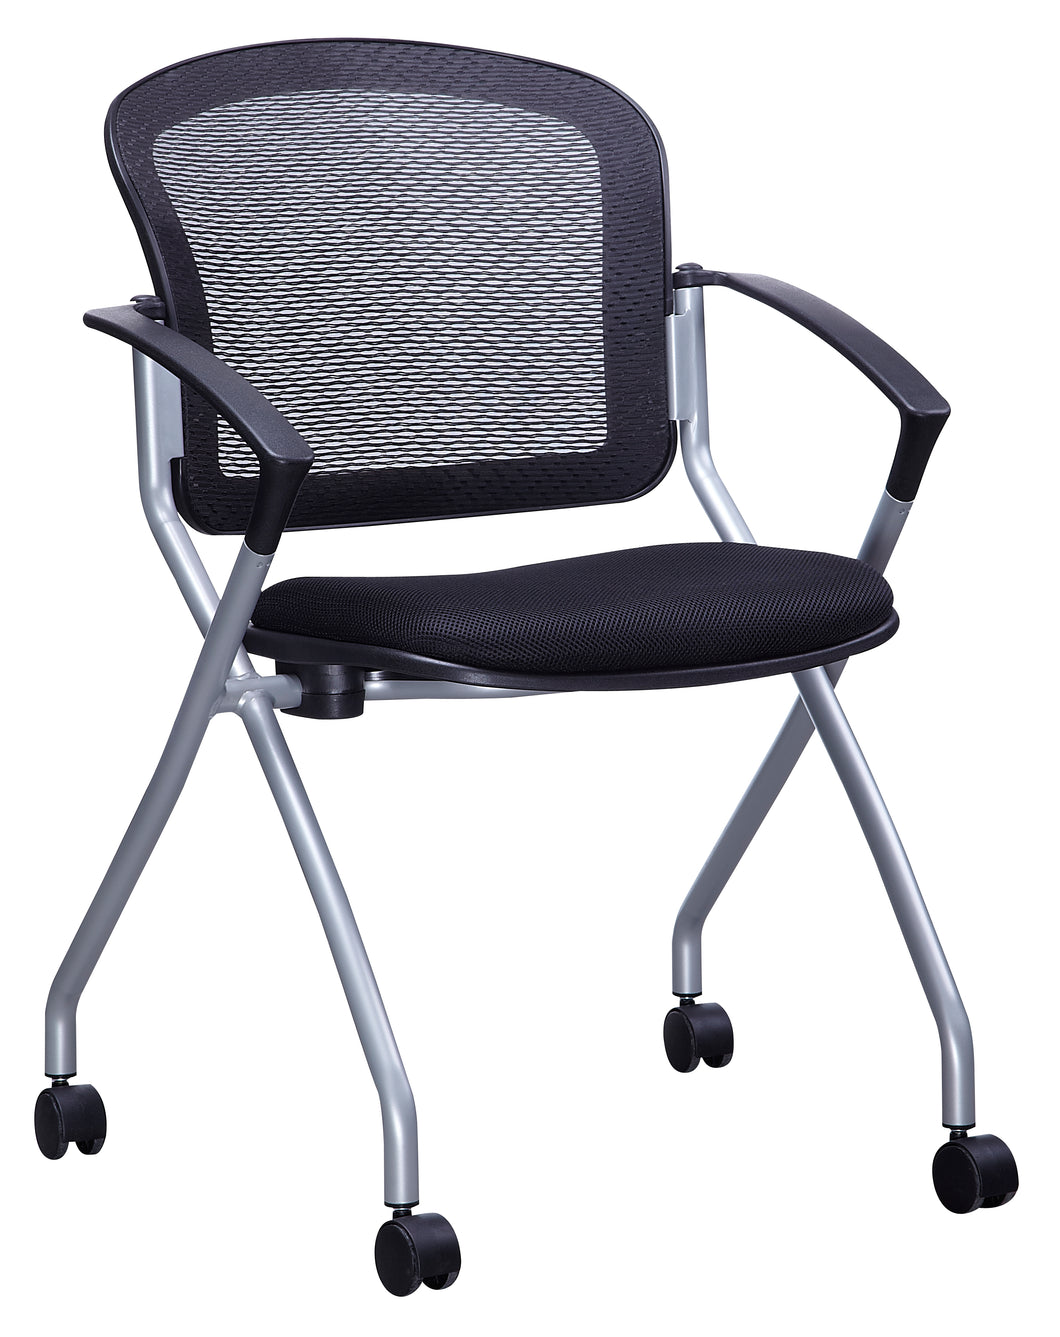 4125 Black Mesh Nesting Chair (Seat Folds Up) $179.95